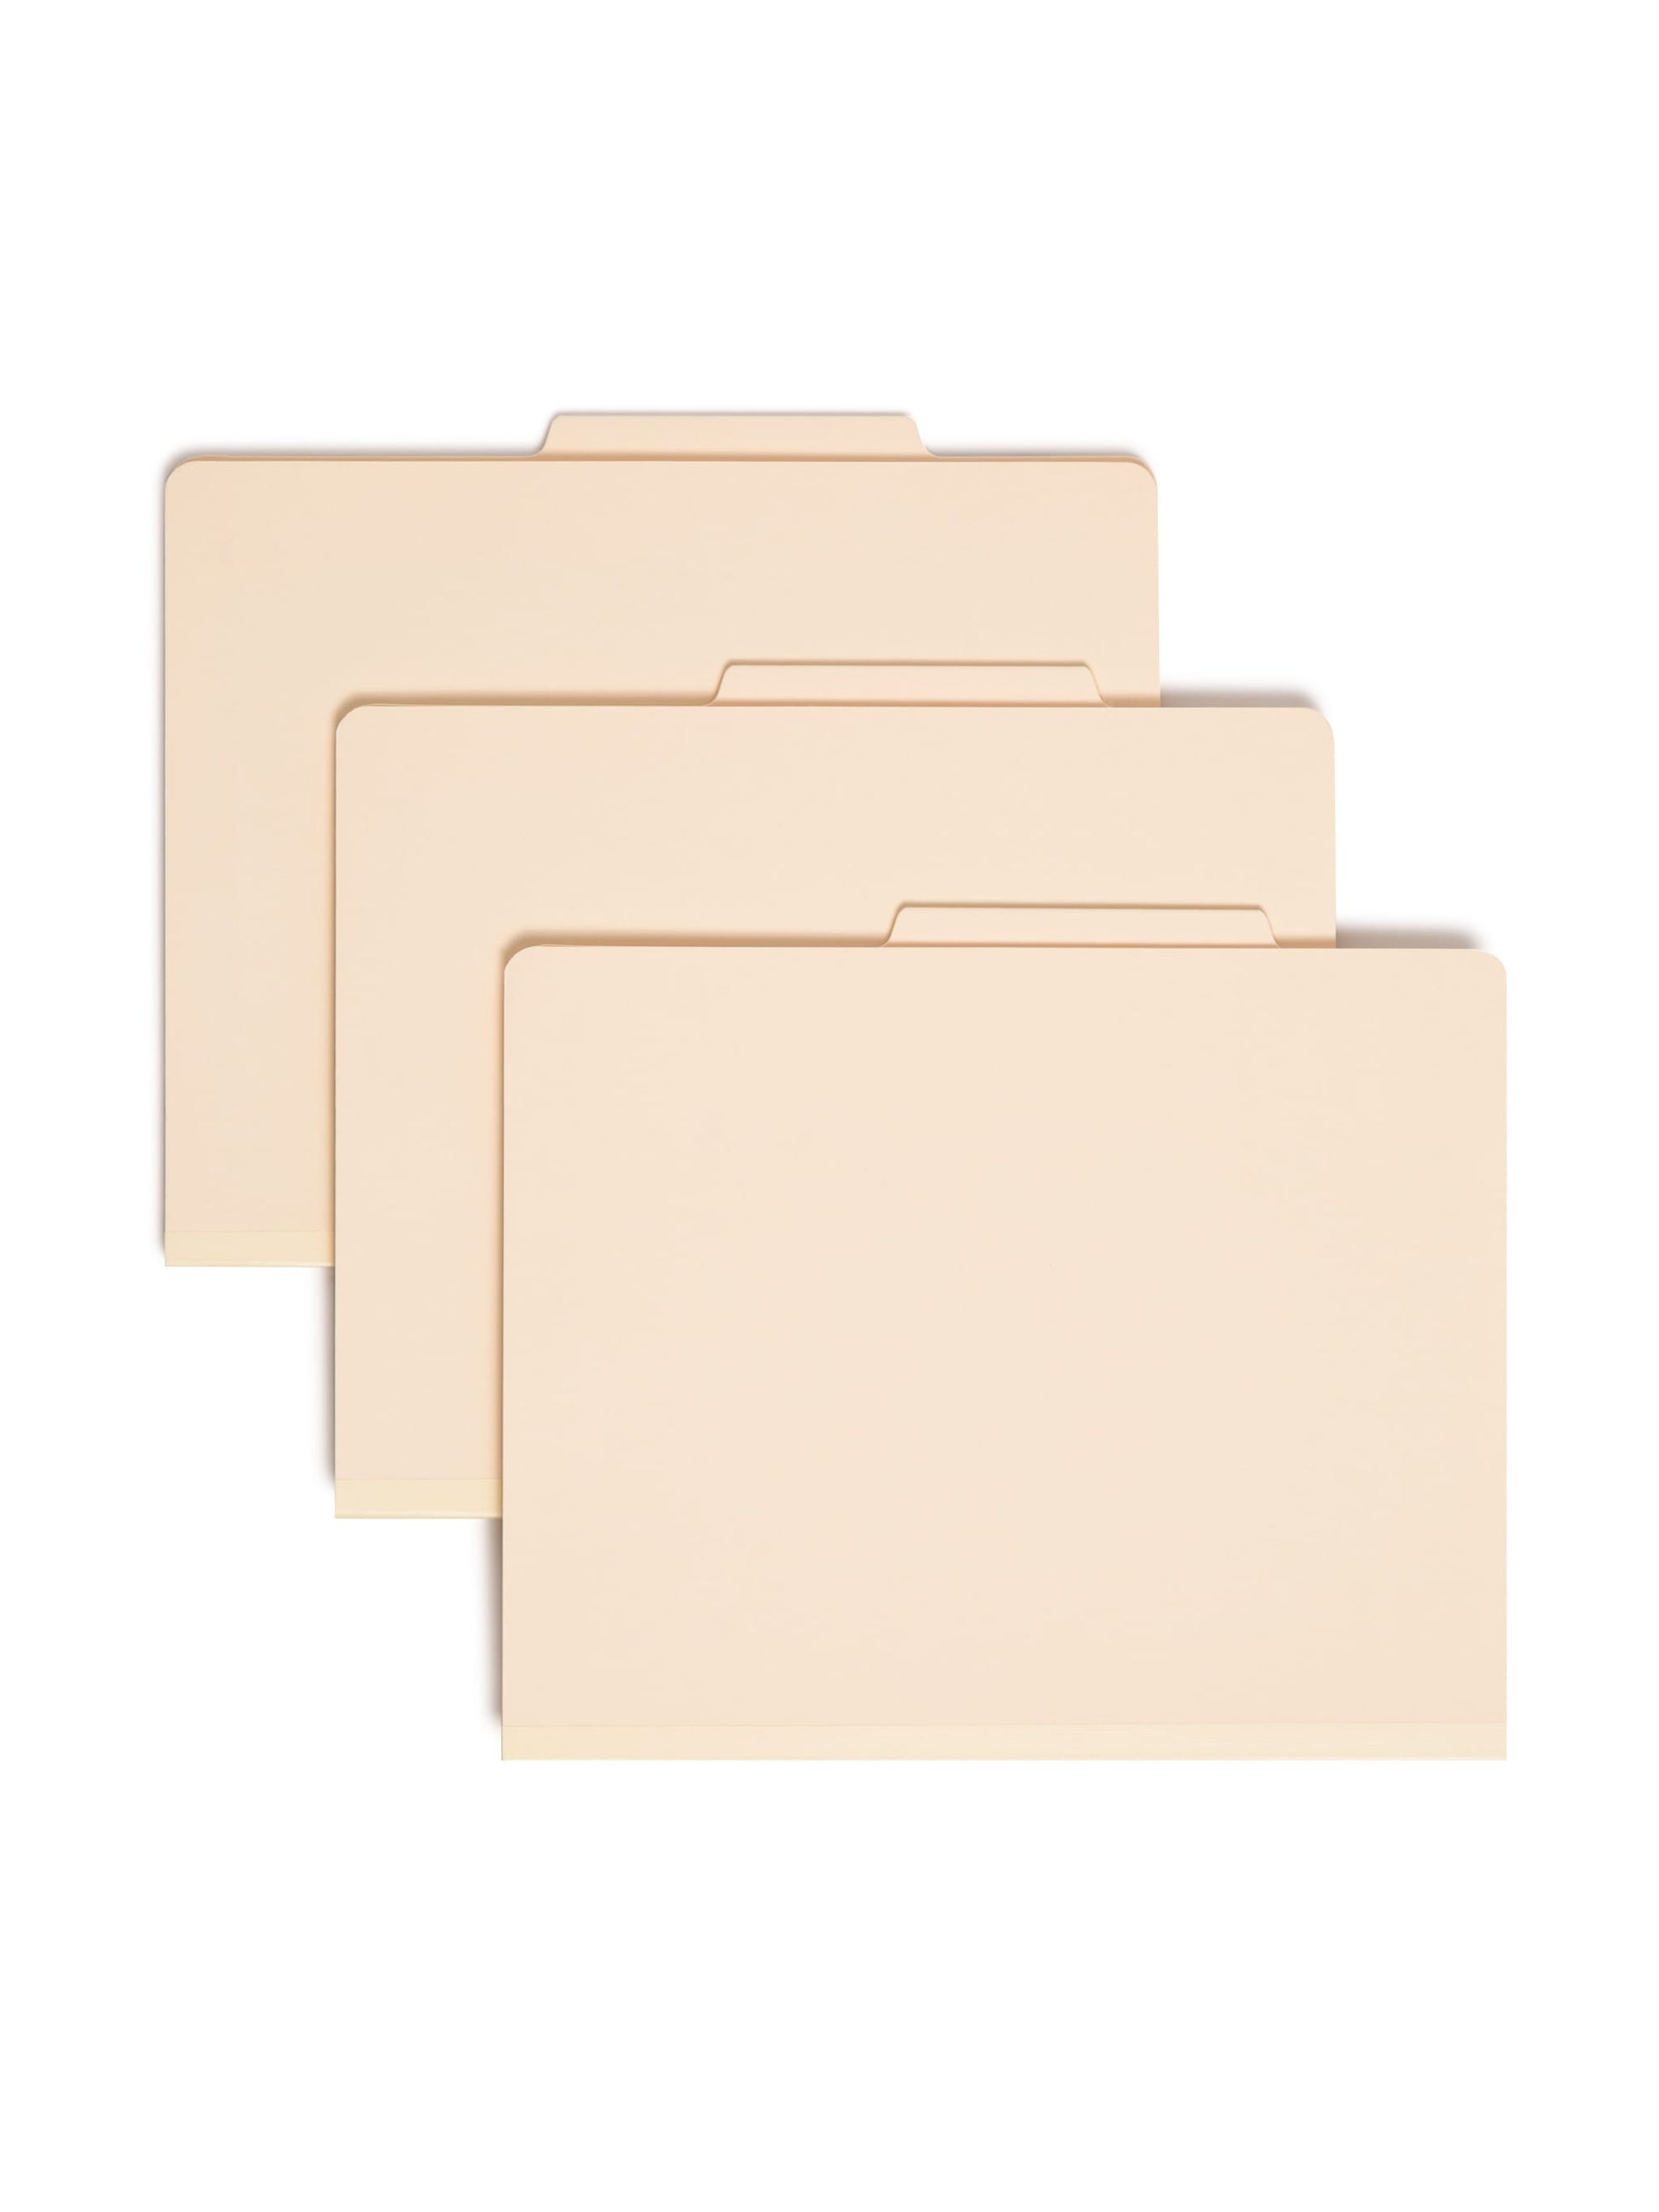 Classification File Folders, 1 Divider, 2 inch Expansion, Manila Color, Letter Size, Set of 0, 30086486137004